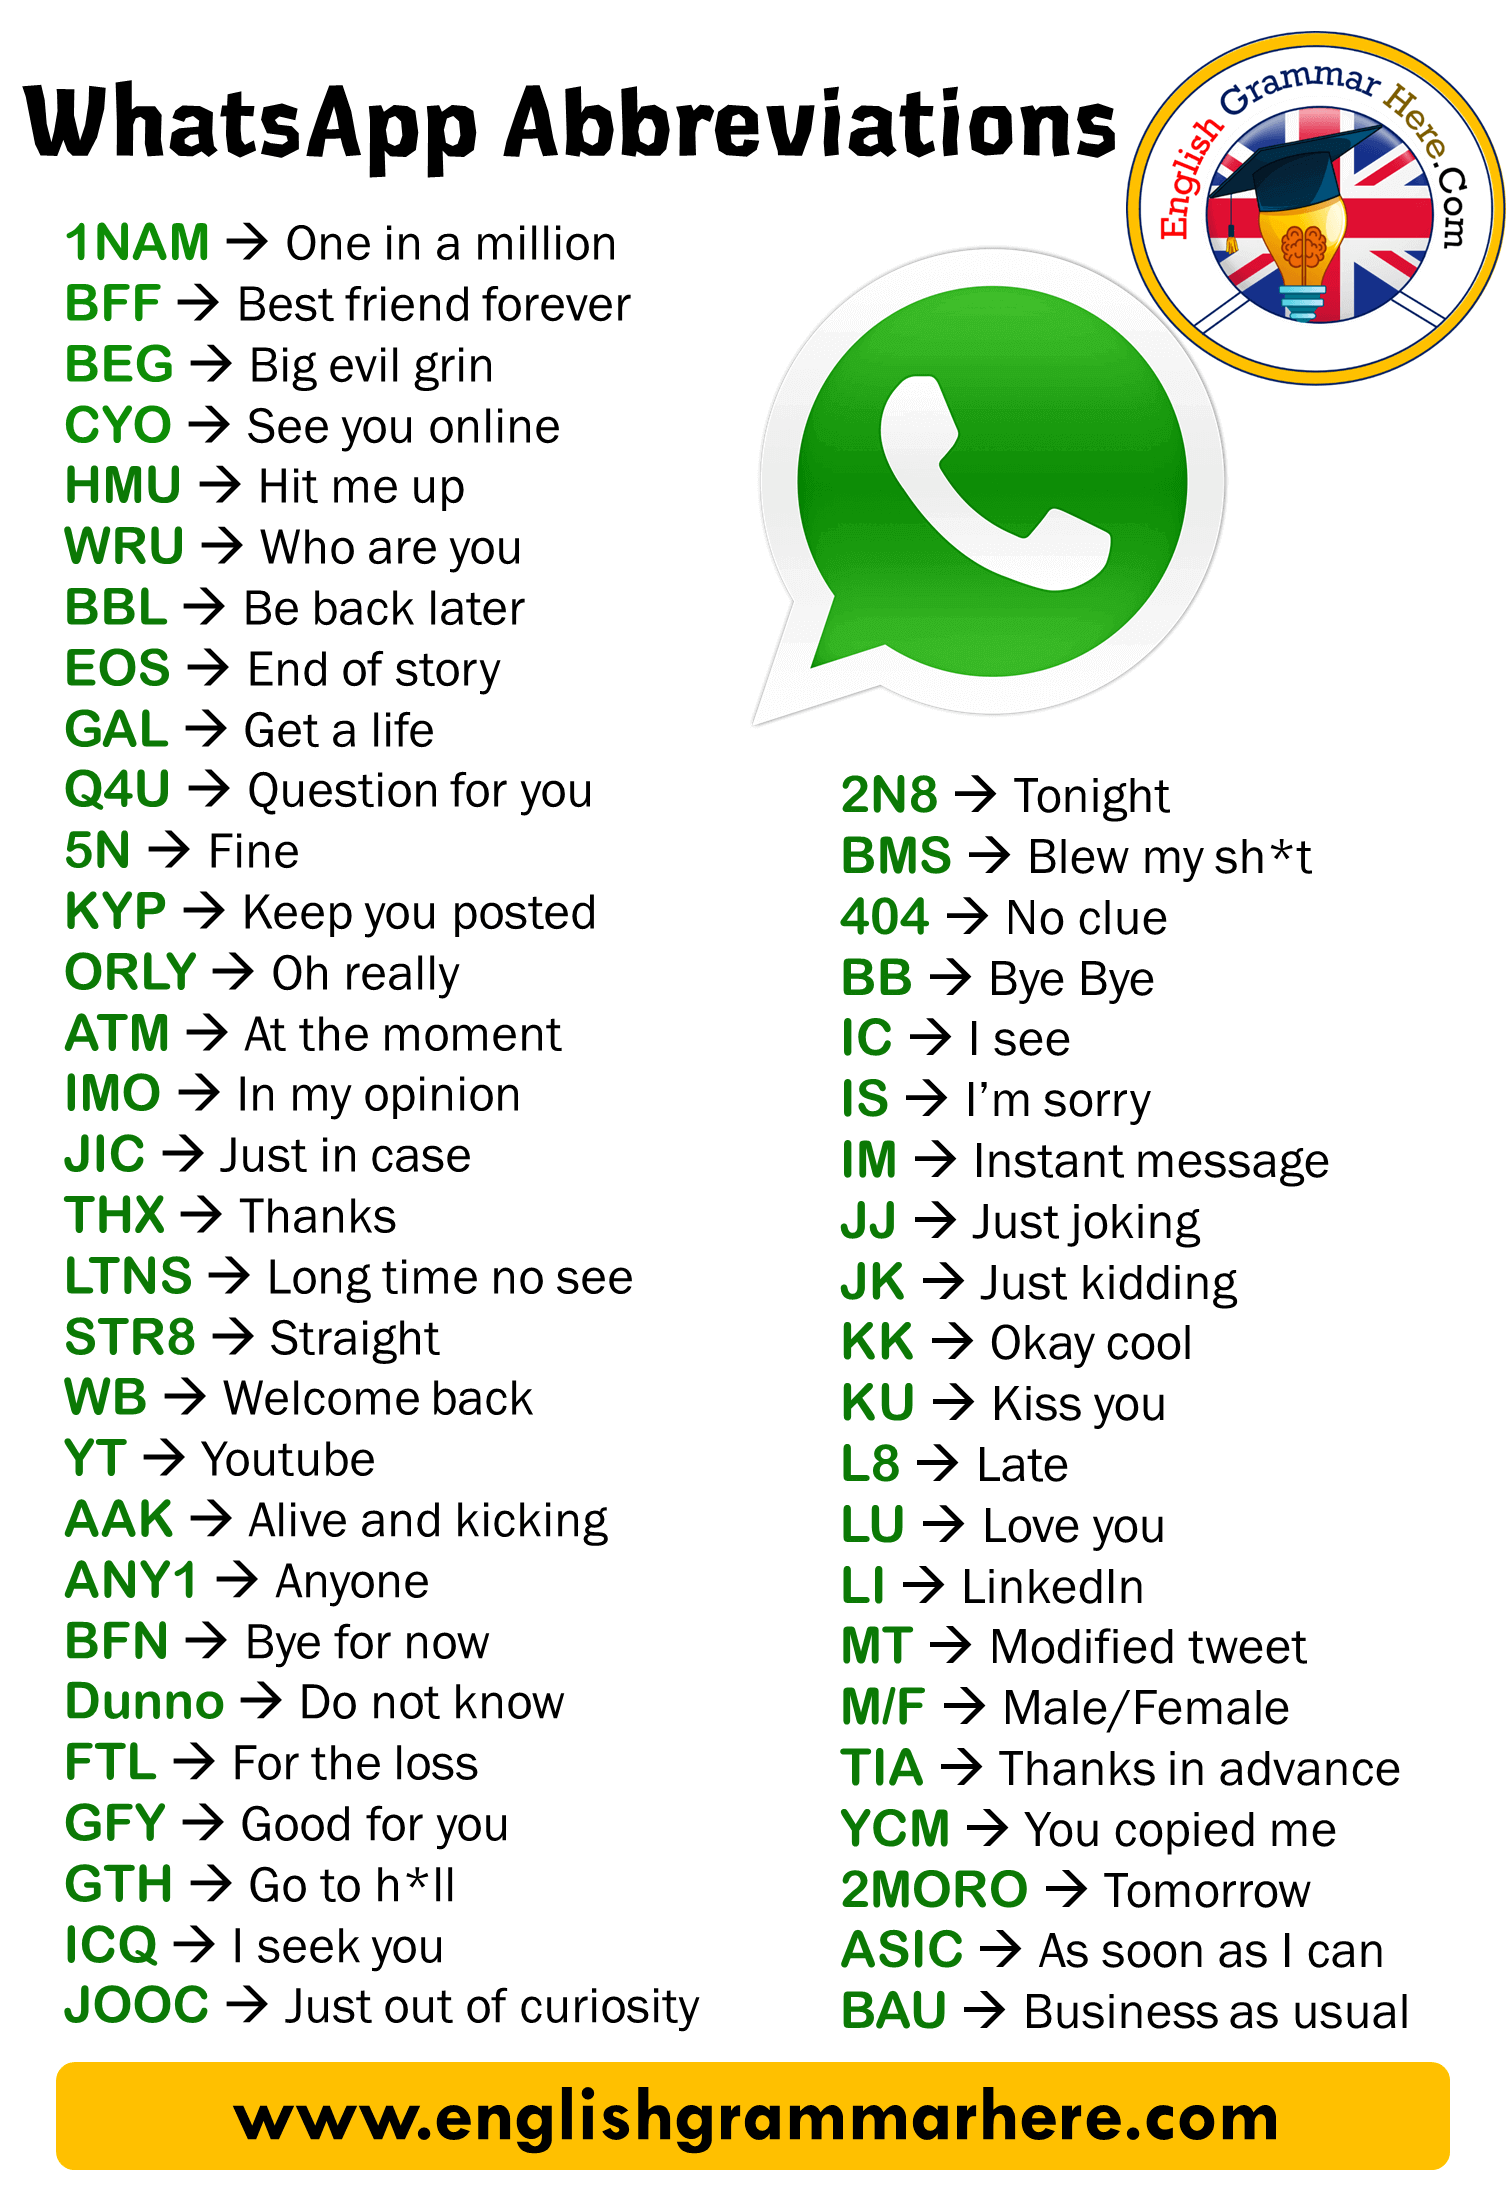 Most Common WhatsApp Abbreviations List